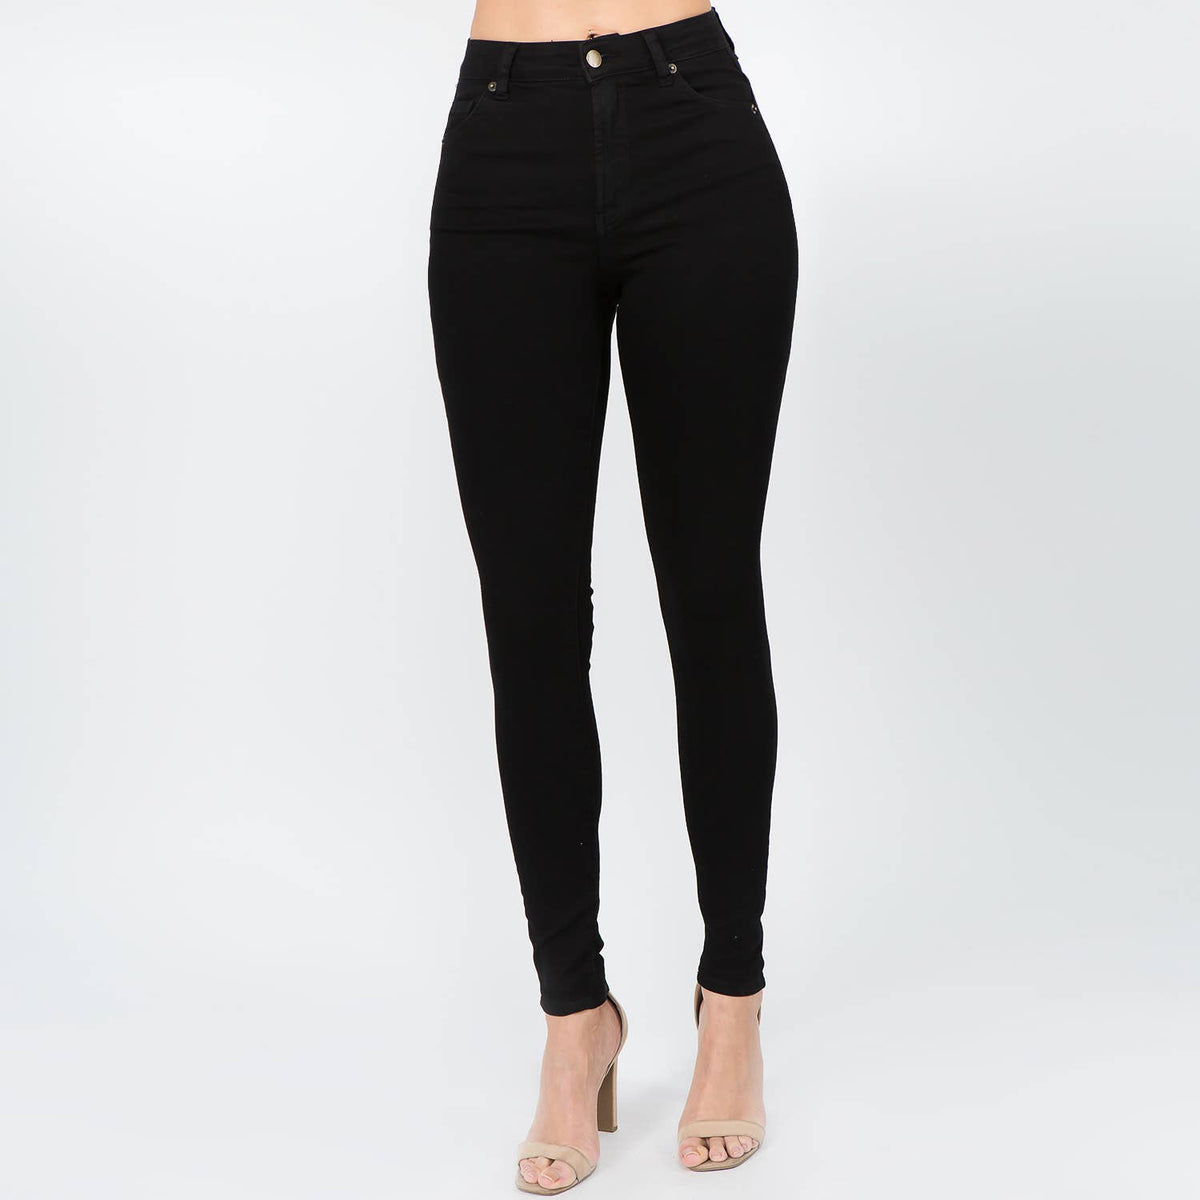 Premium Basic High Waist Skinny Pants - LURE Boutique